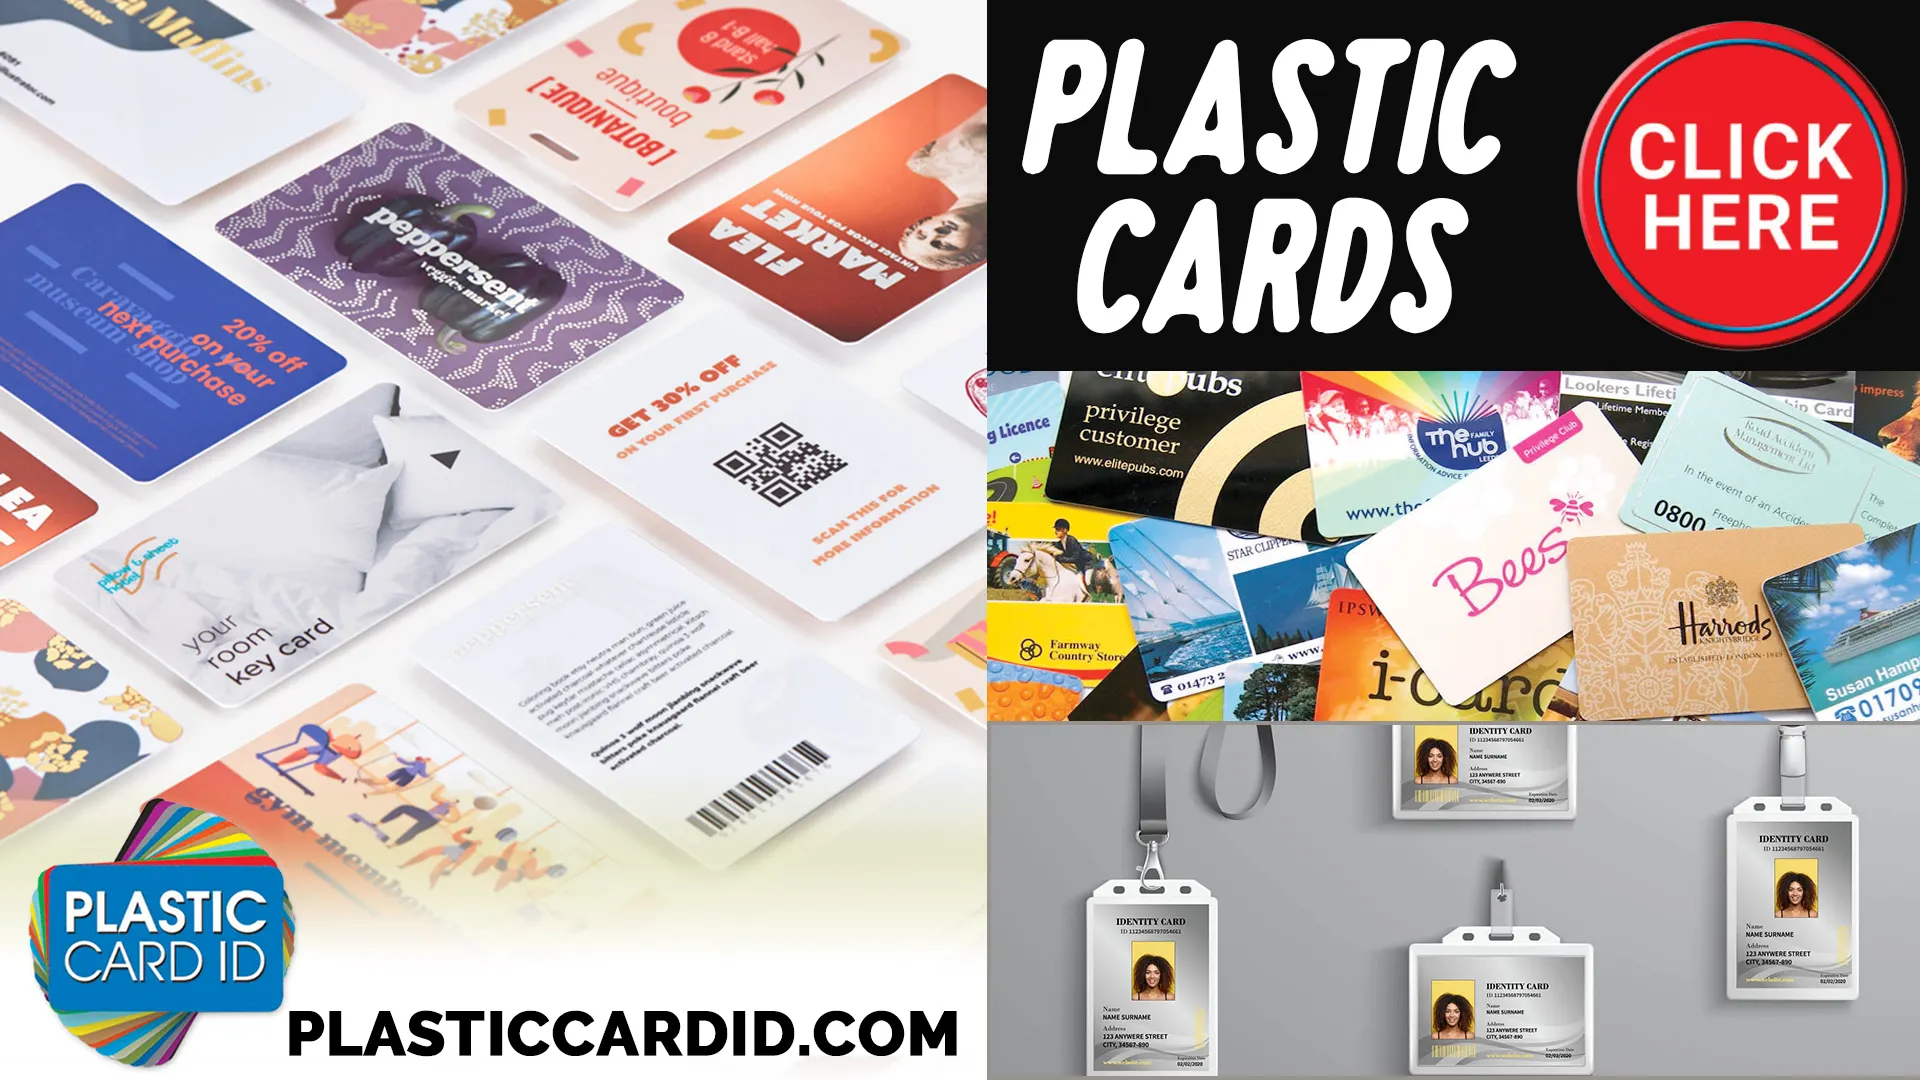 The Arc of Progress: Plastic Card ID
's Key Tag Campaigns